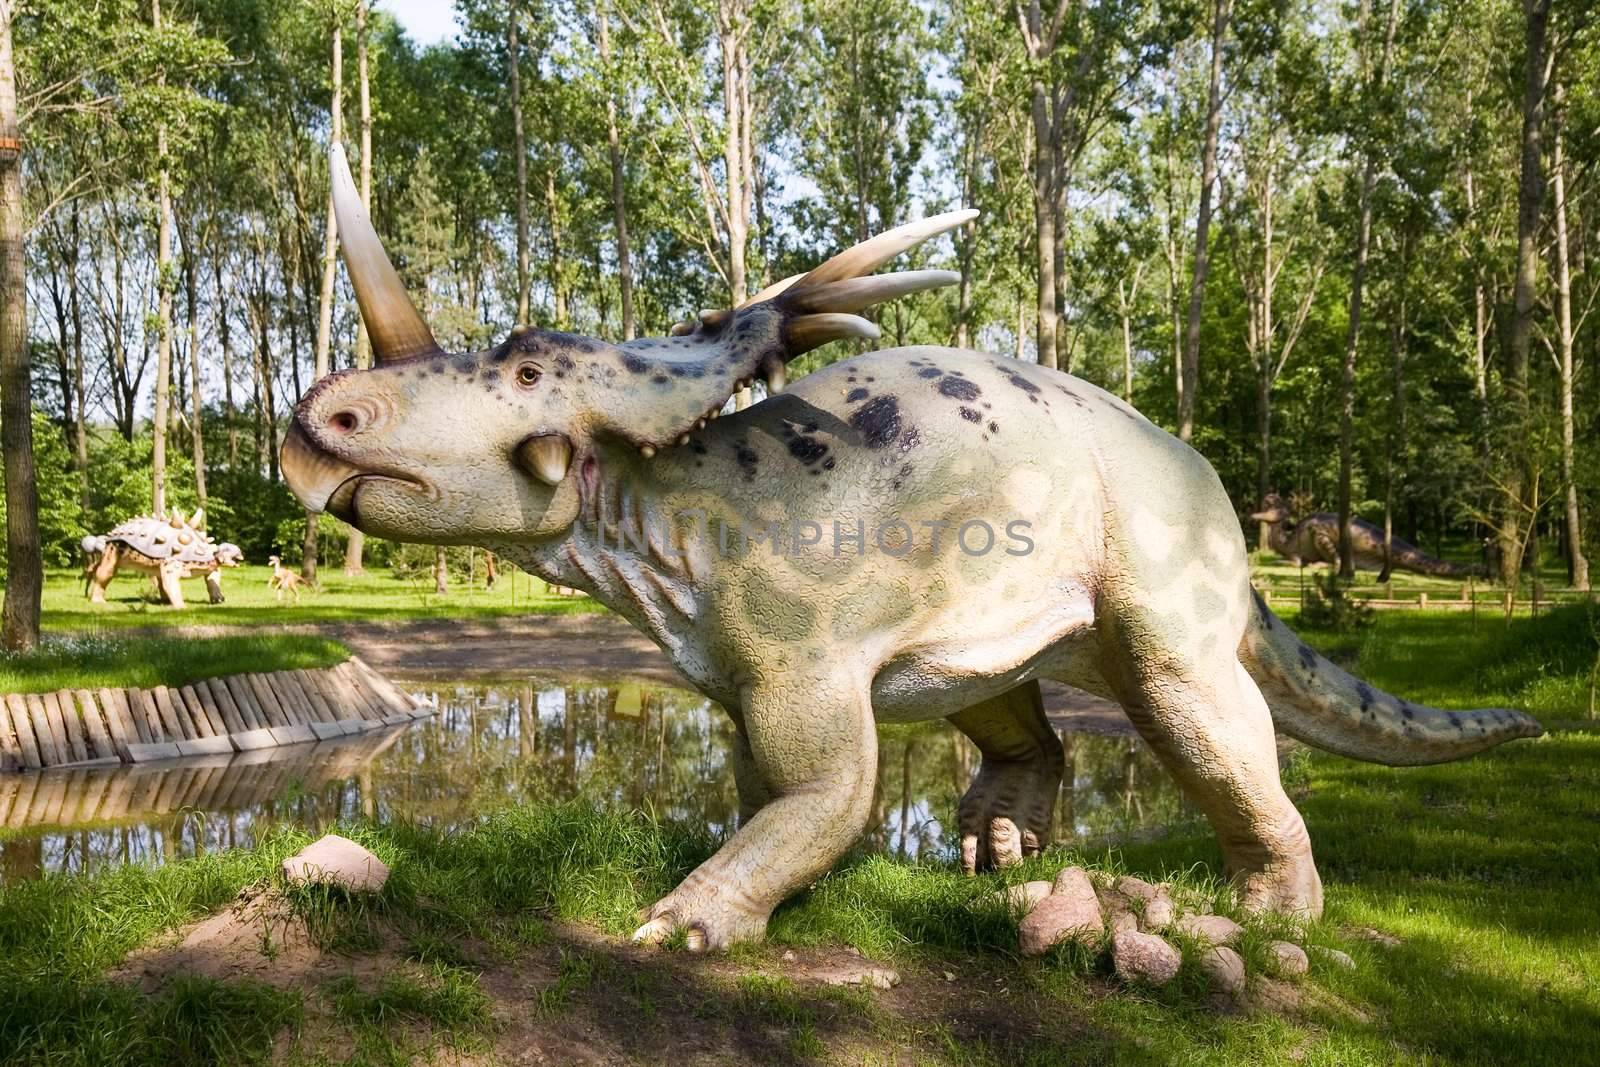 Jurassic park - set of dinosaurs - Styracosaurus albertensis